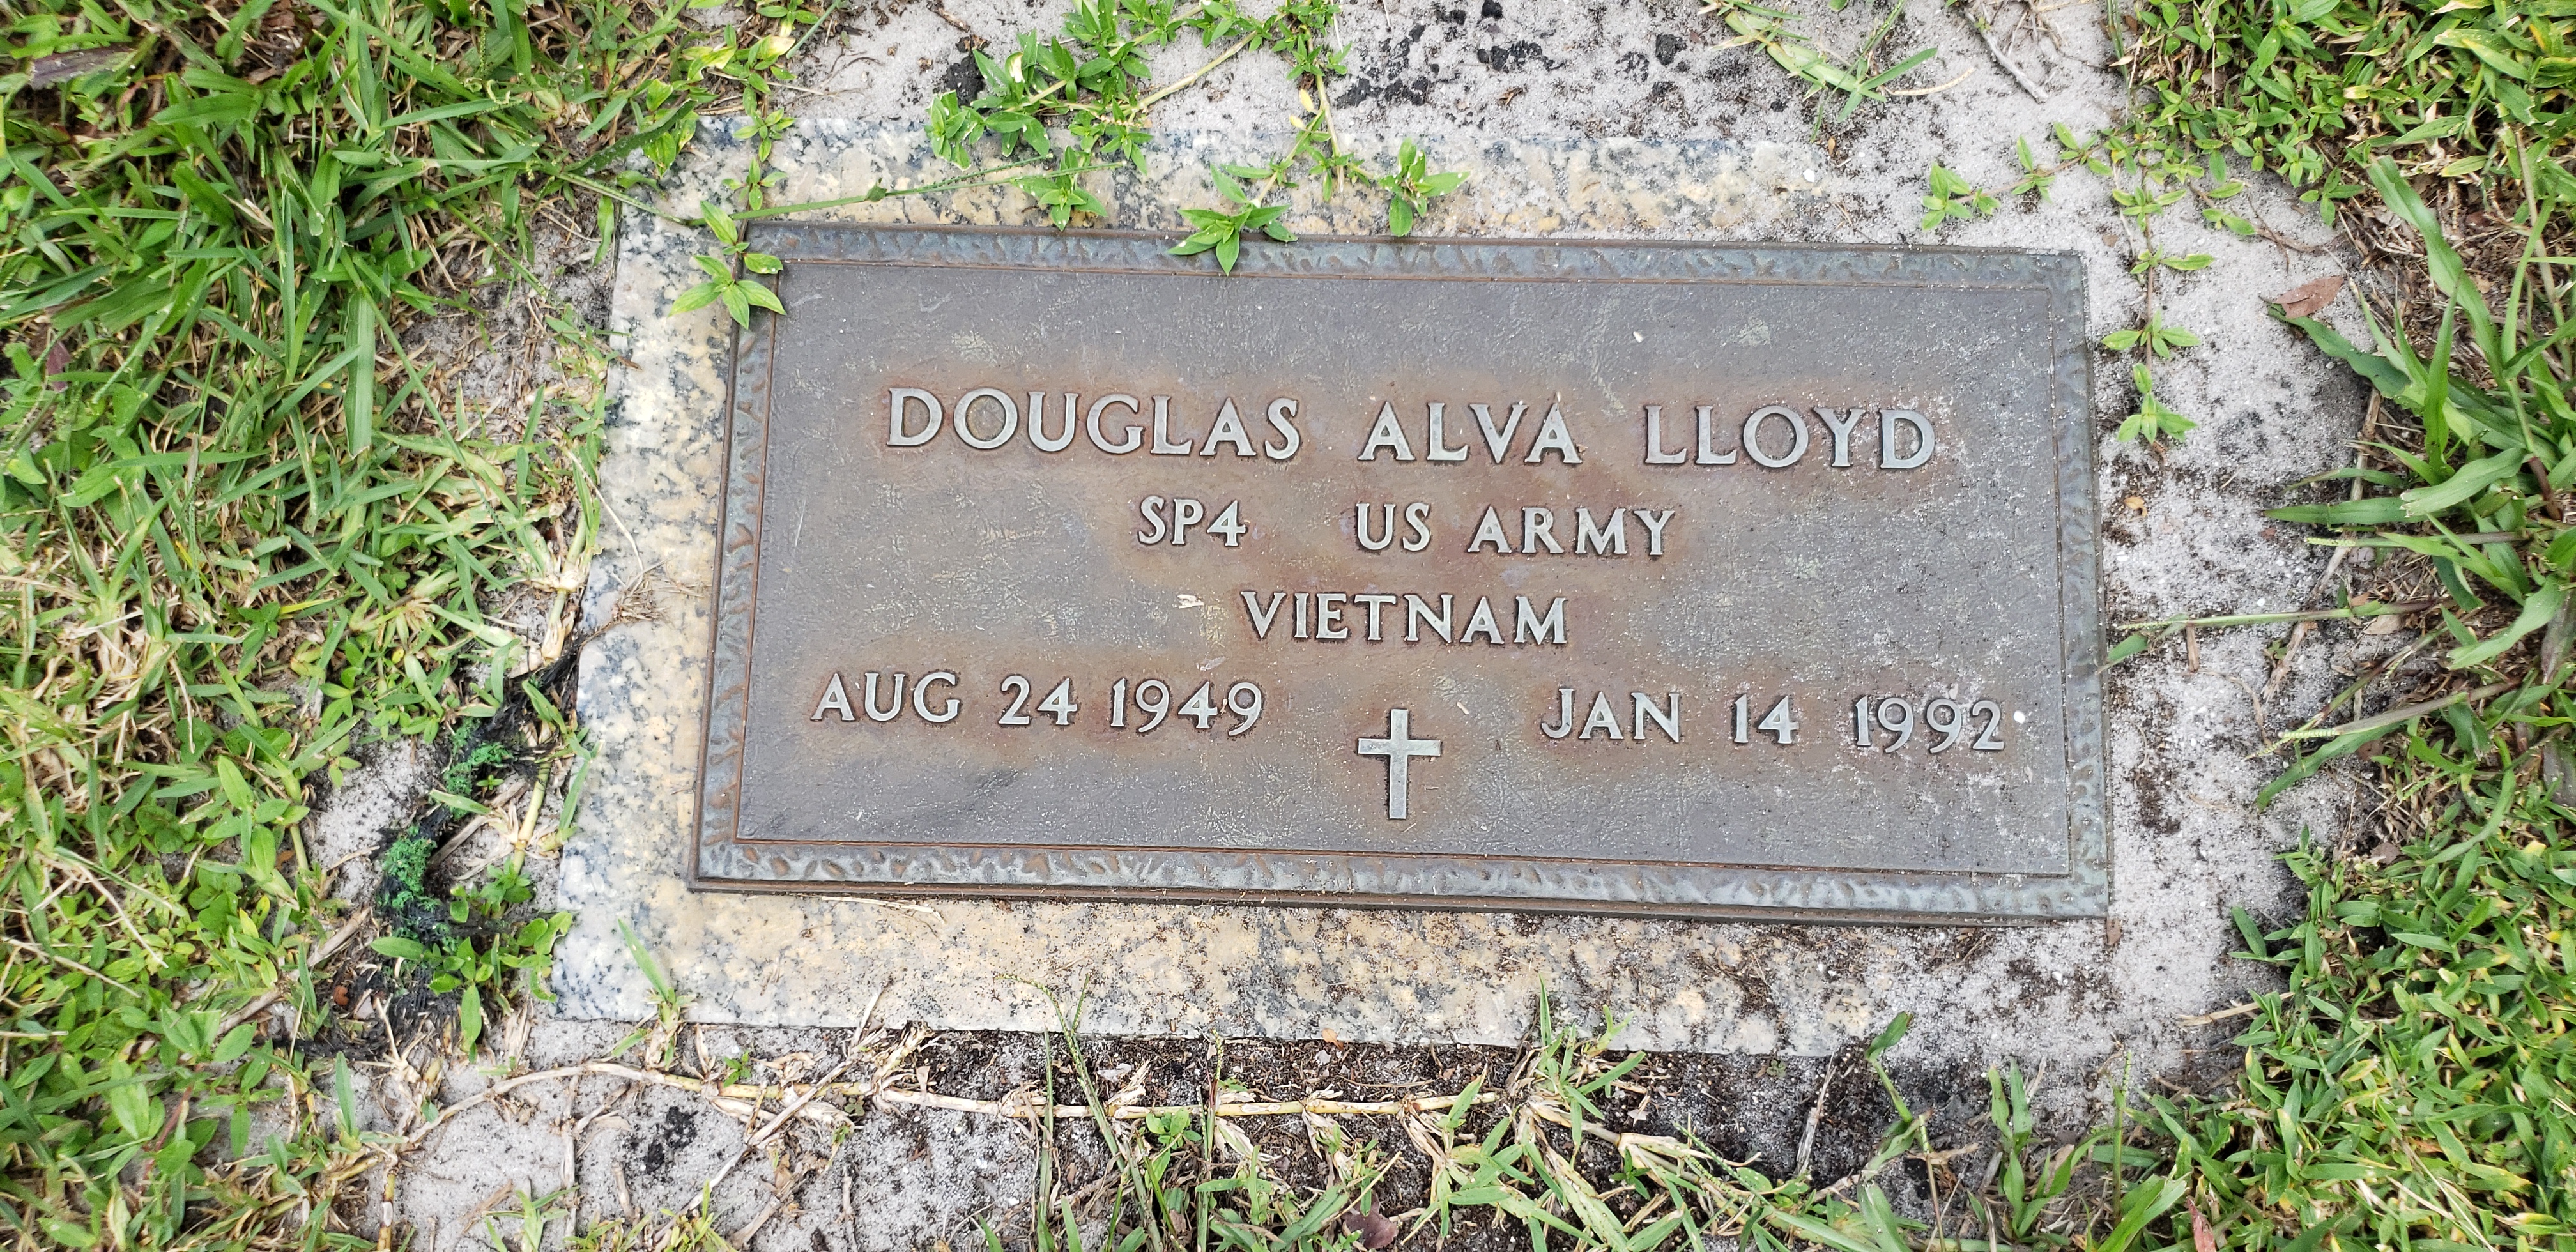 Douglas Alva Lloyd